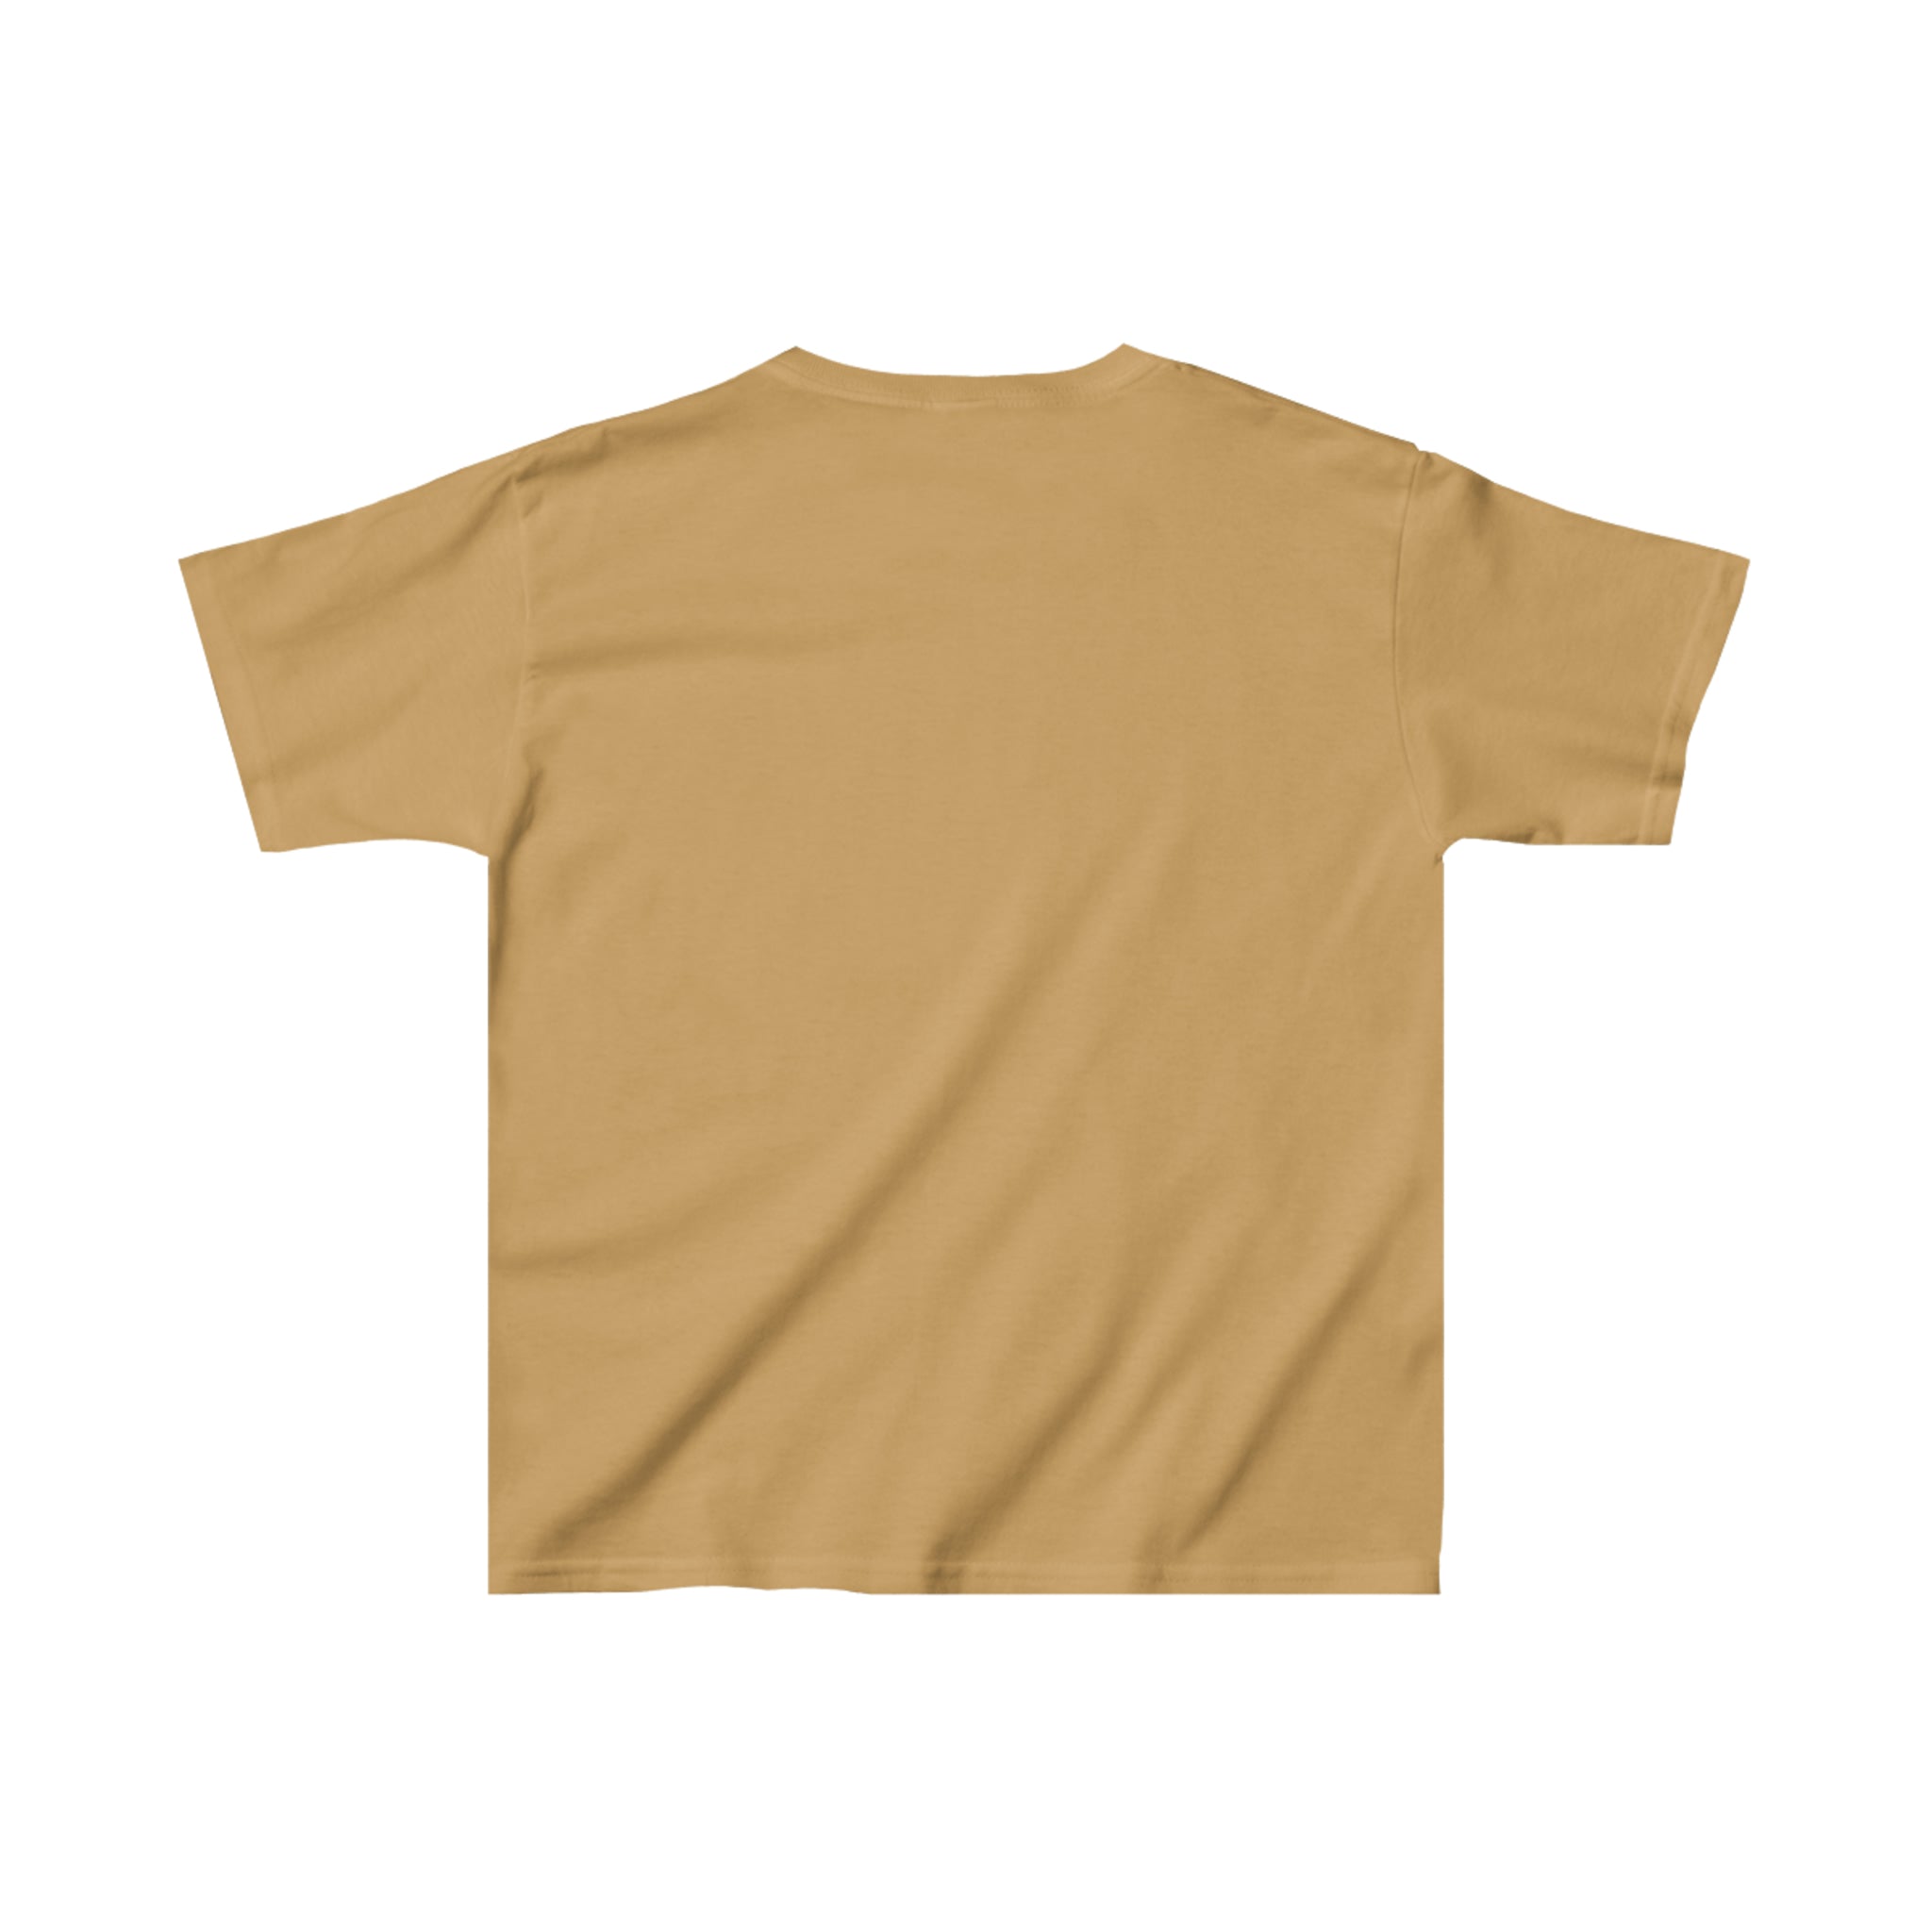 Toledo Mercurys T-Shirt (Youth)